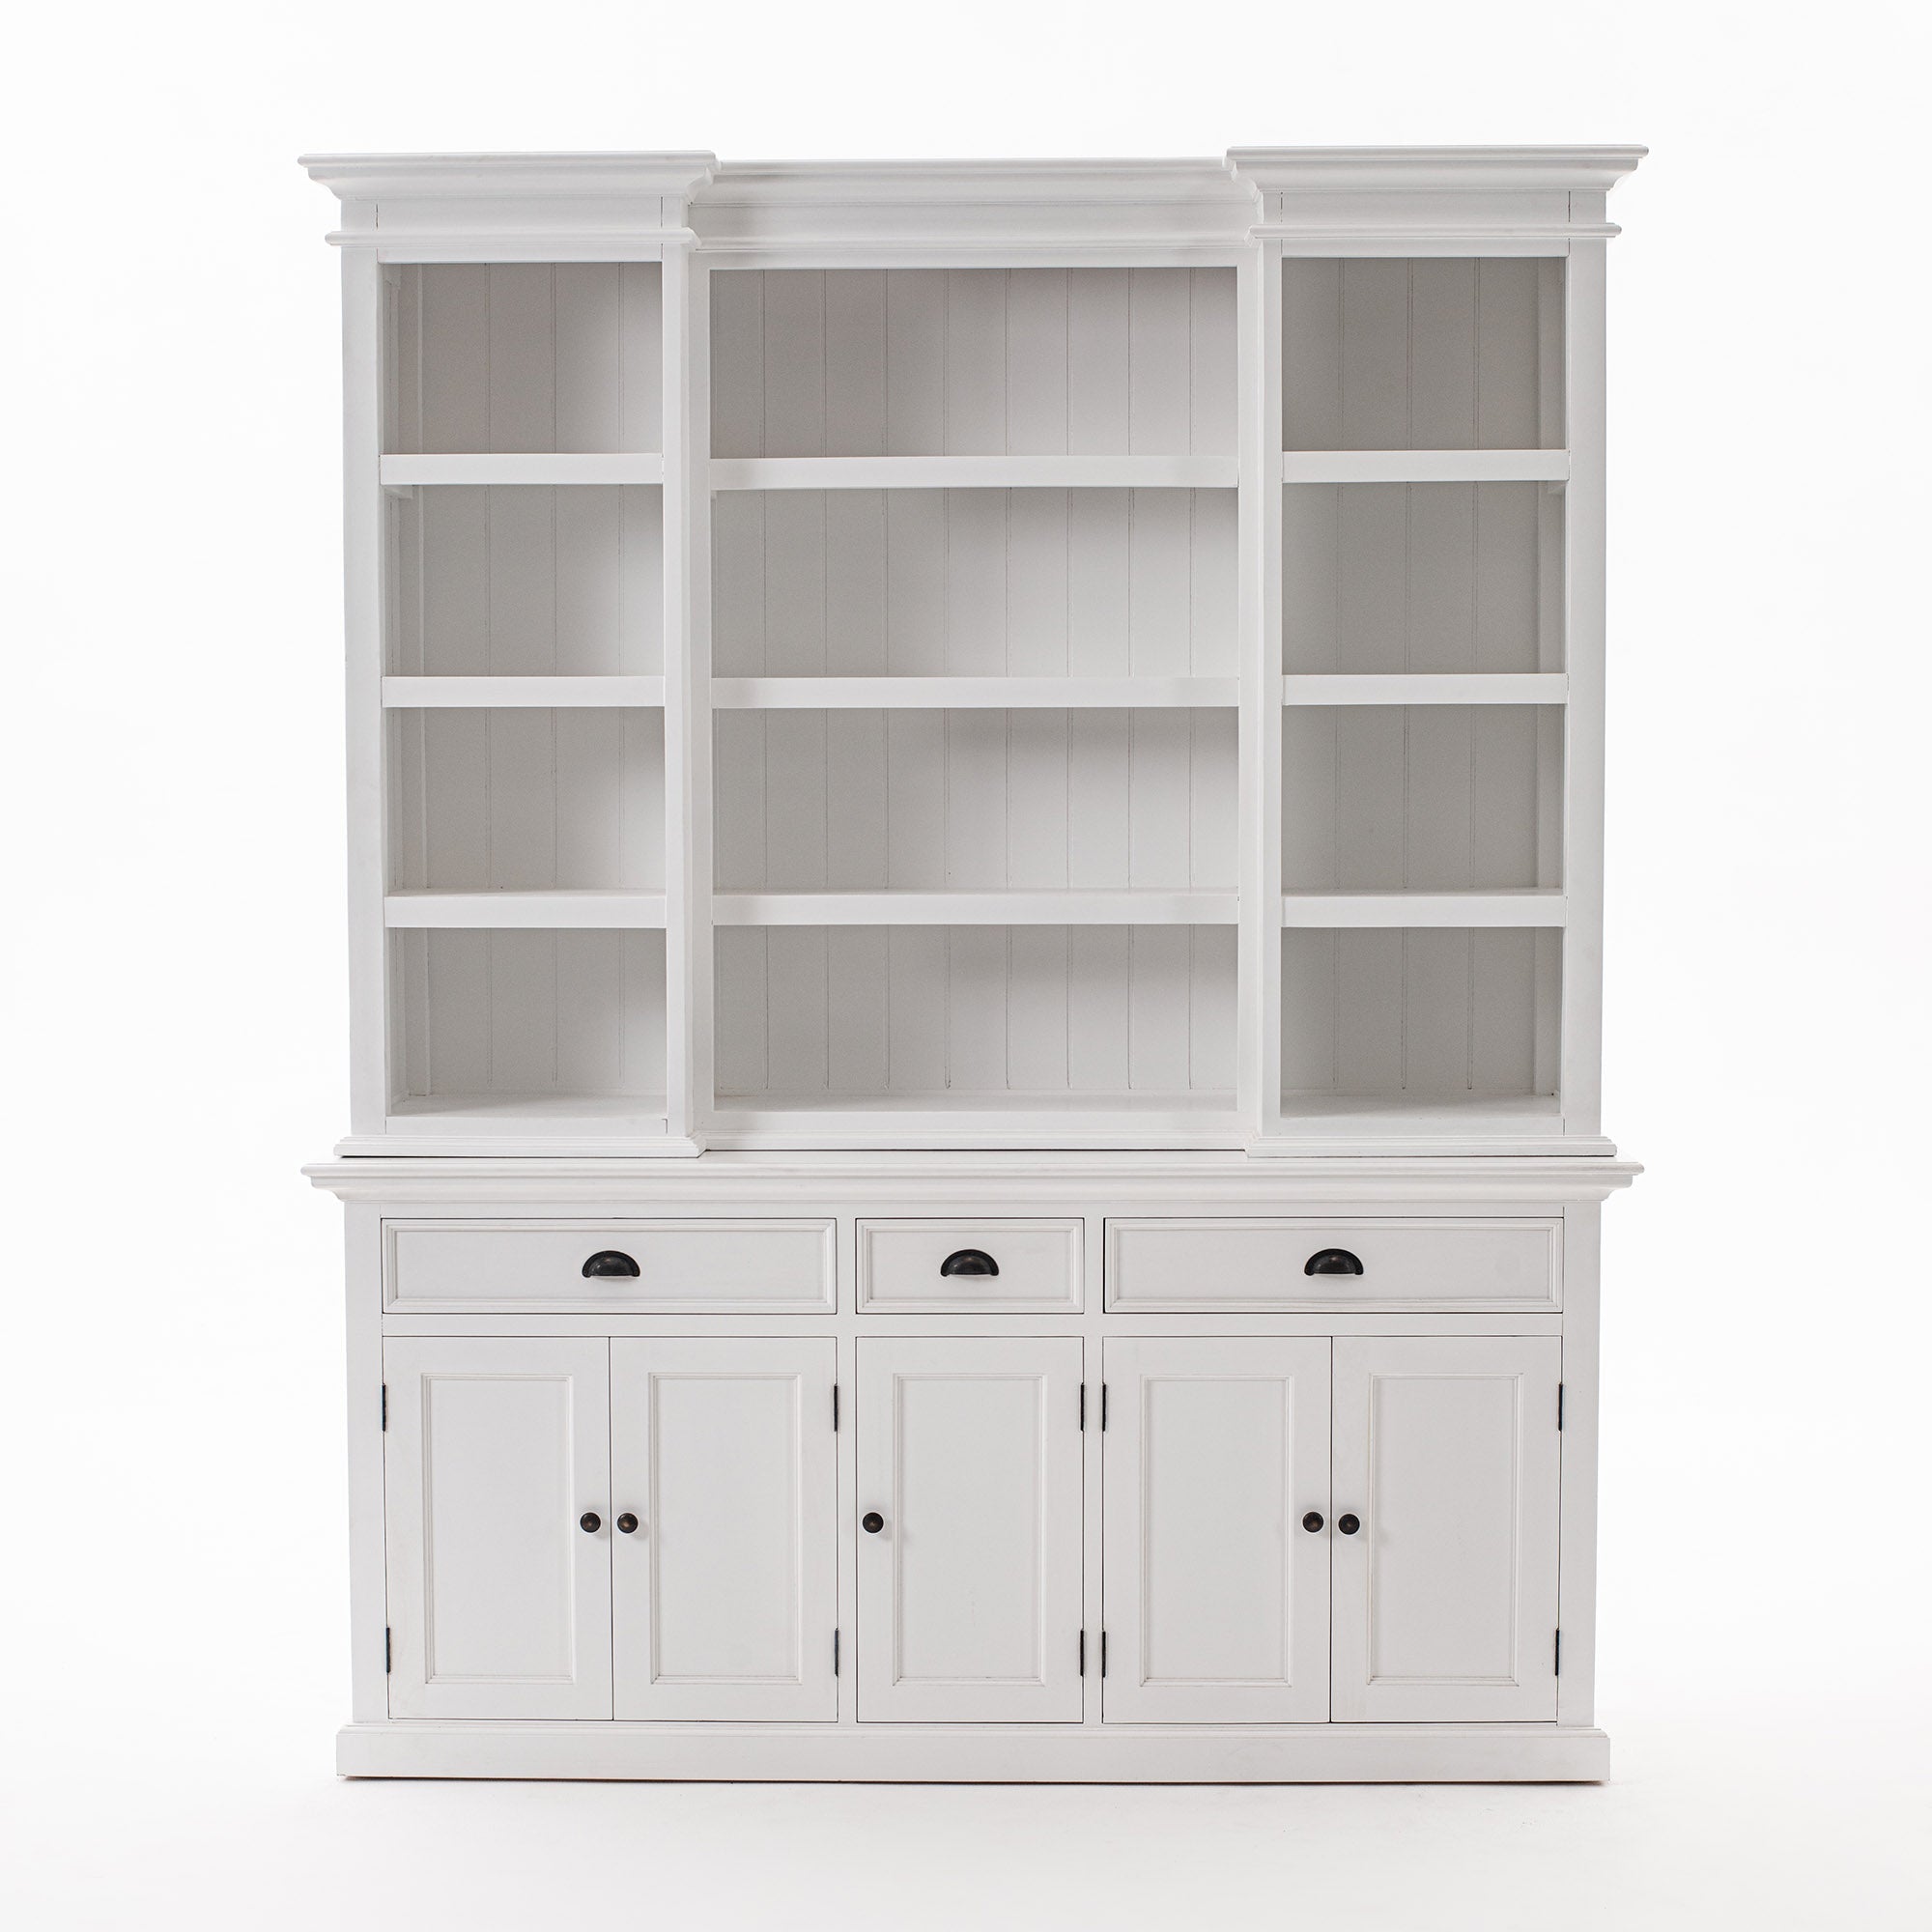 Halifax Coastal White Kitchen Hutch Cabinet with 5 Doors 3 Drawers